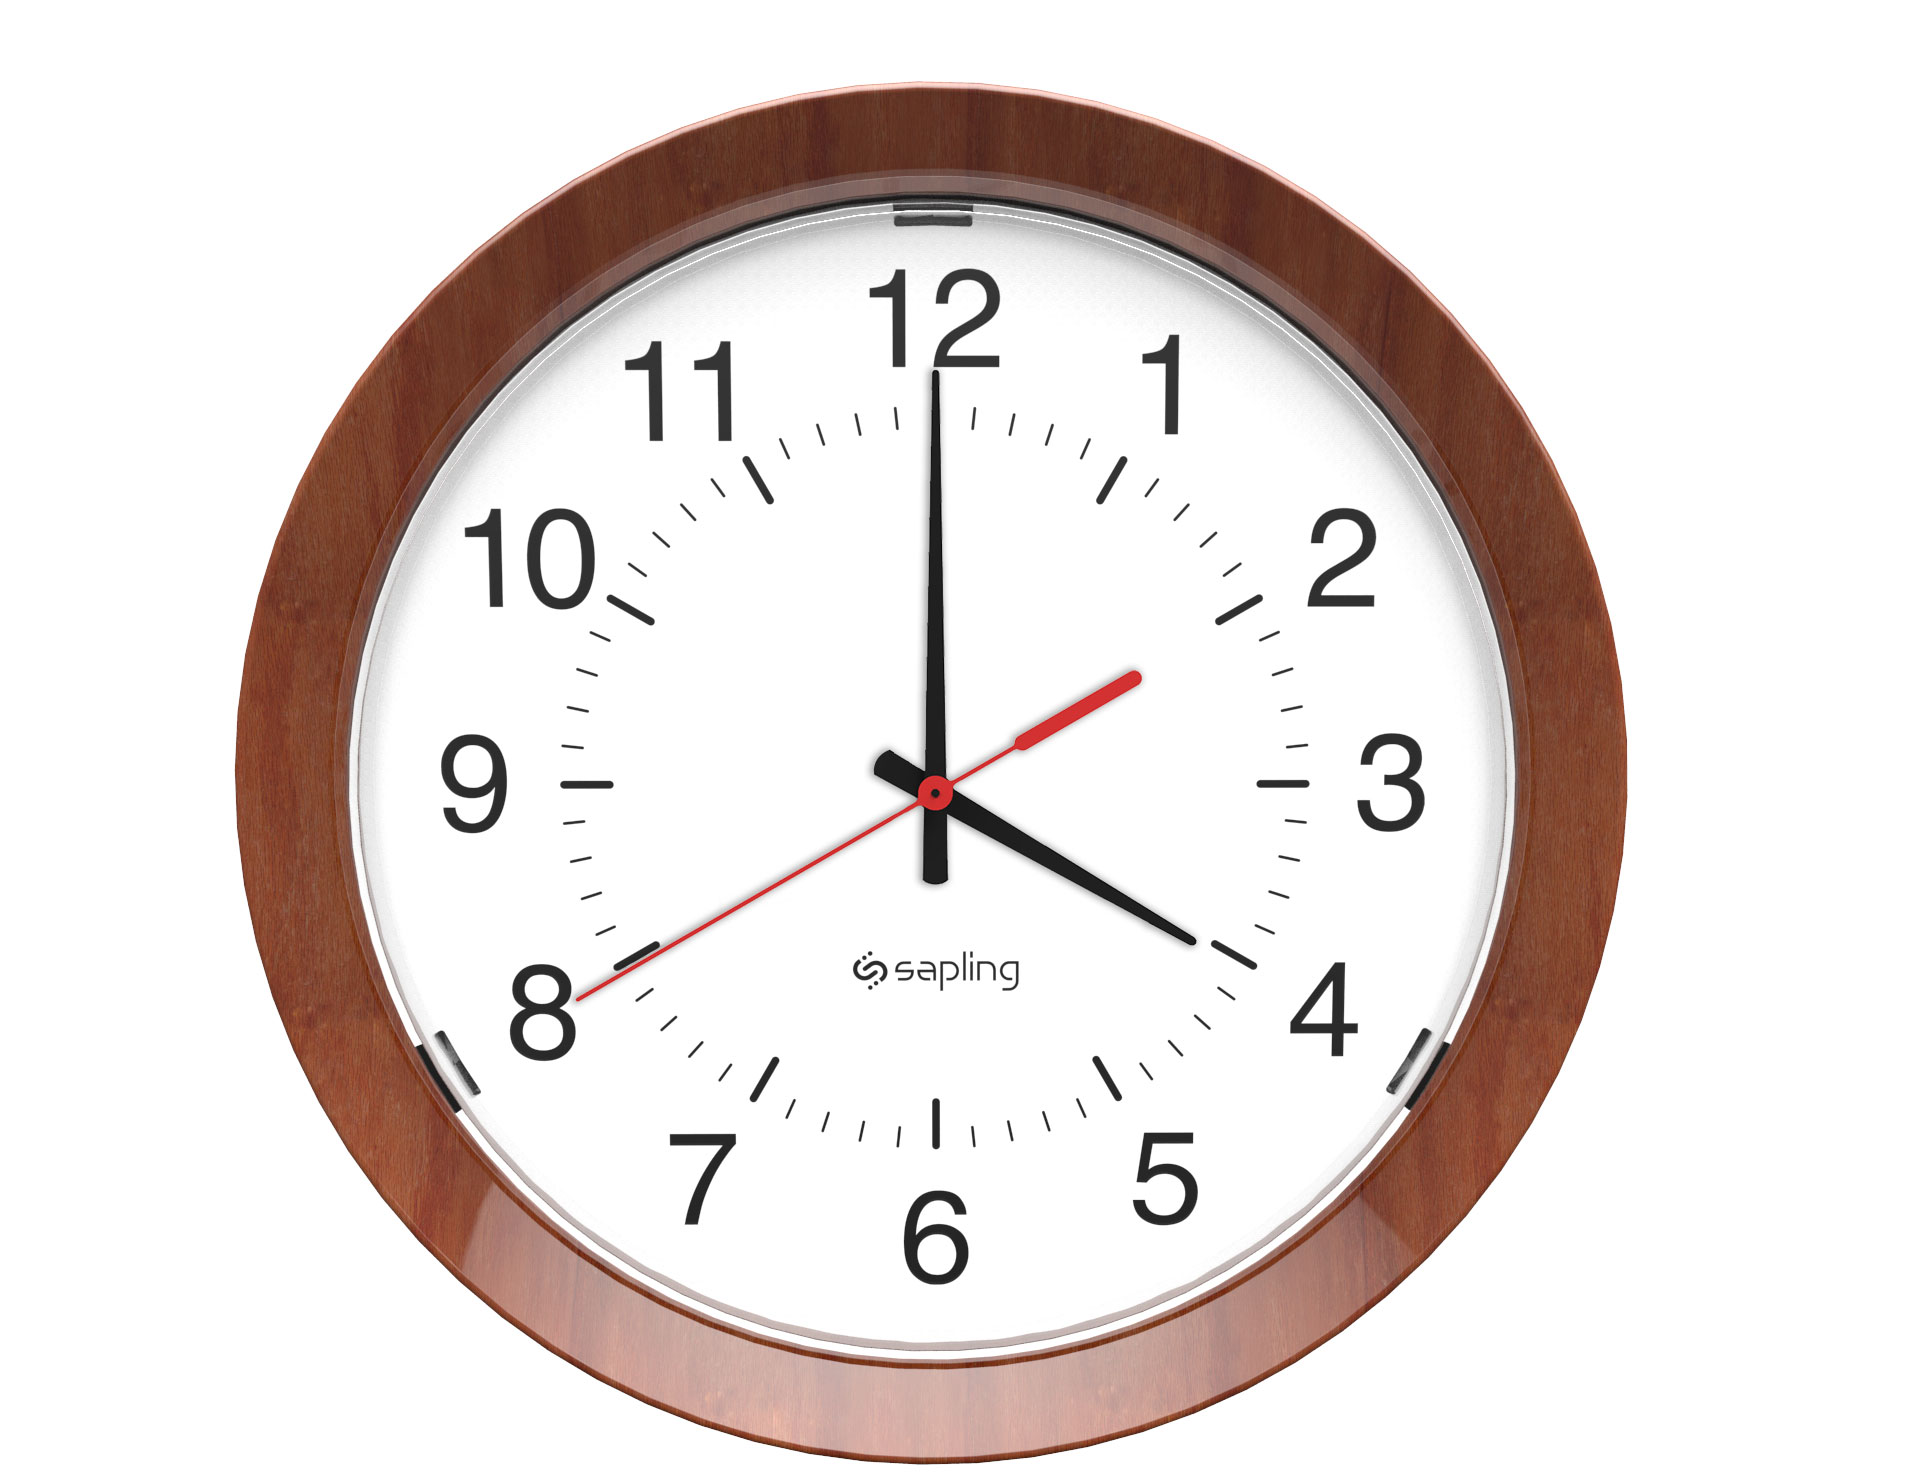 Analog Clocks | Analog Synchronized Clock Systems by Sapling Clocks ...